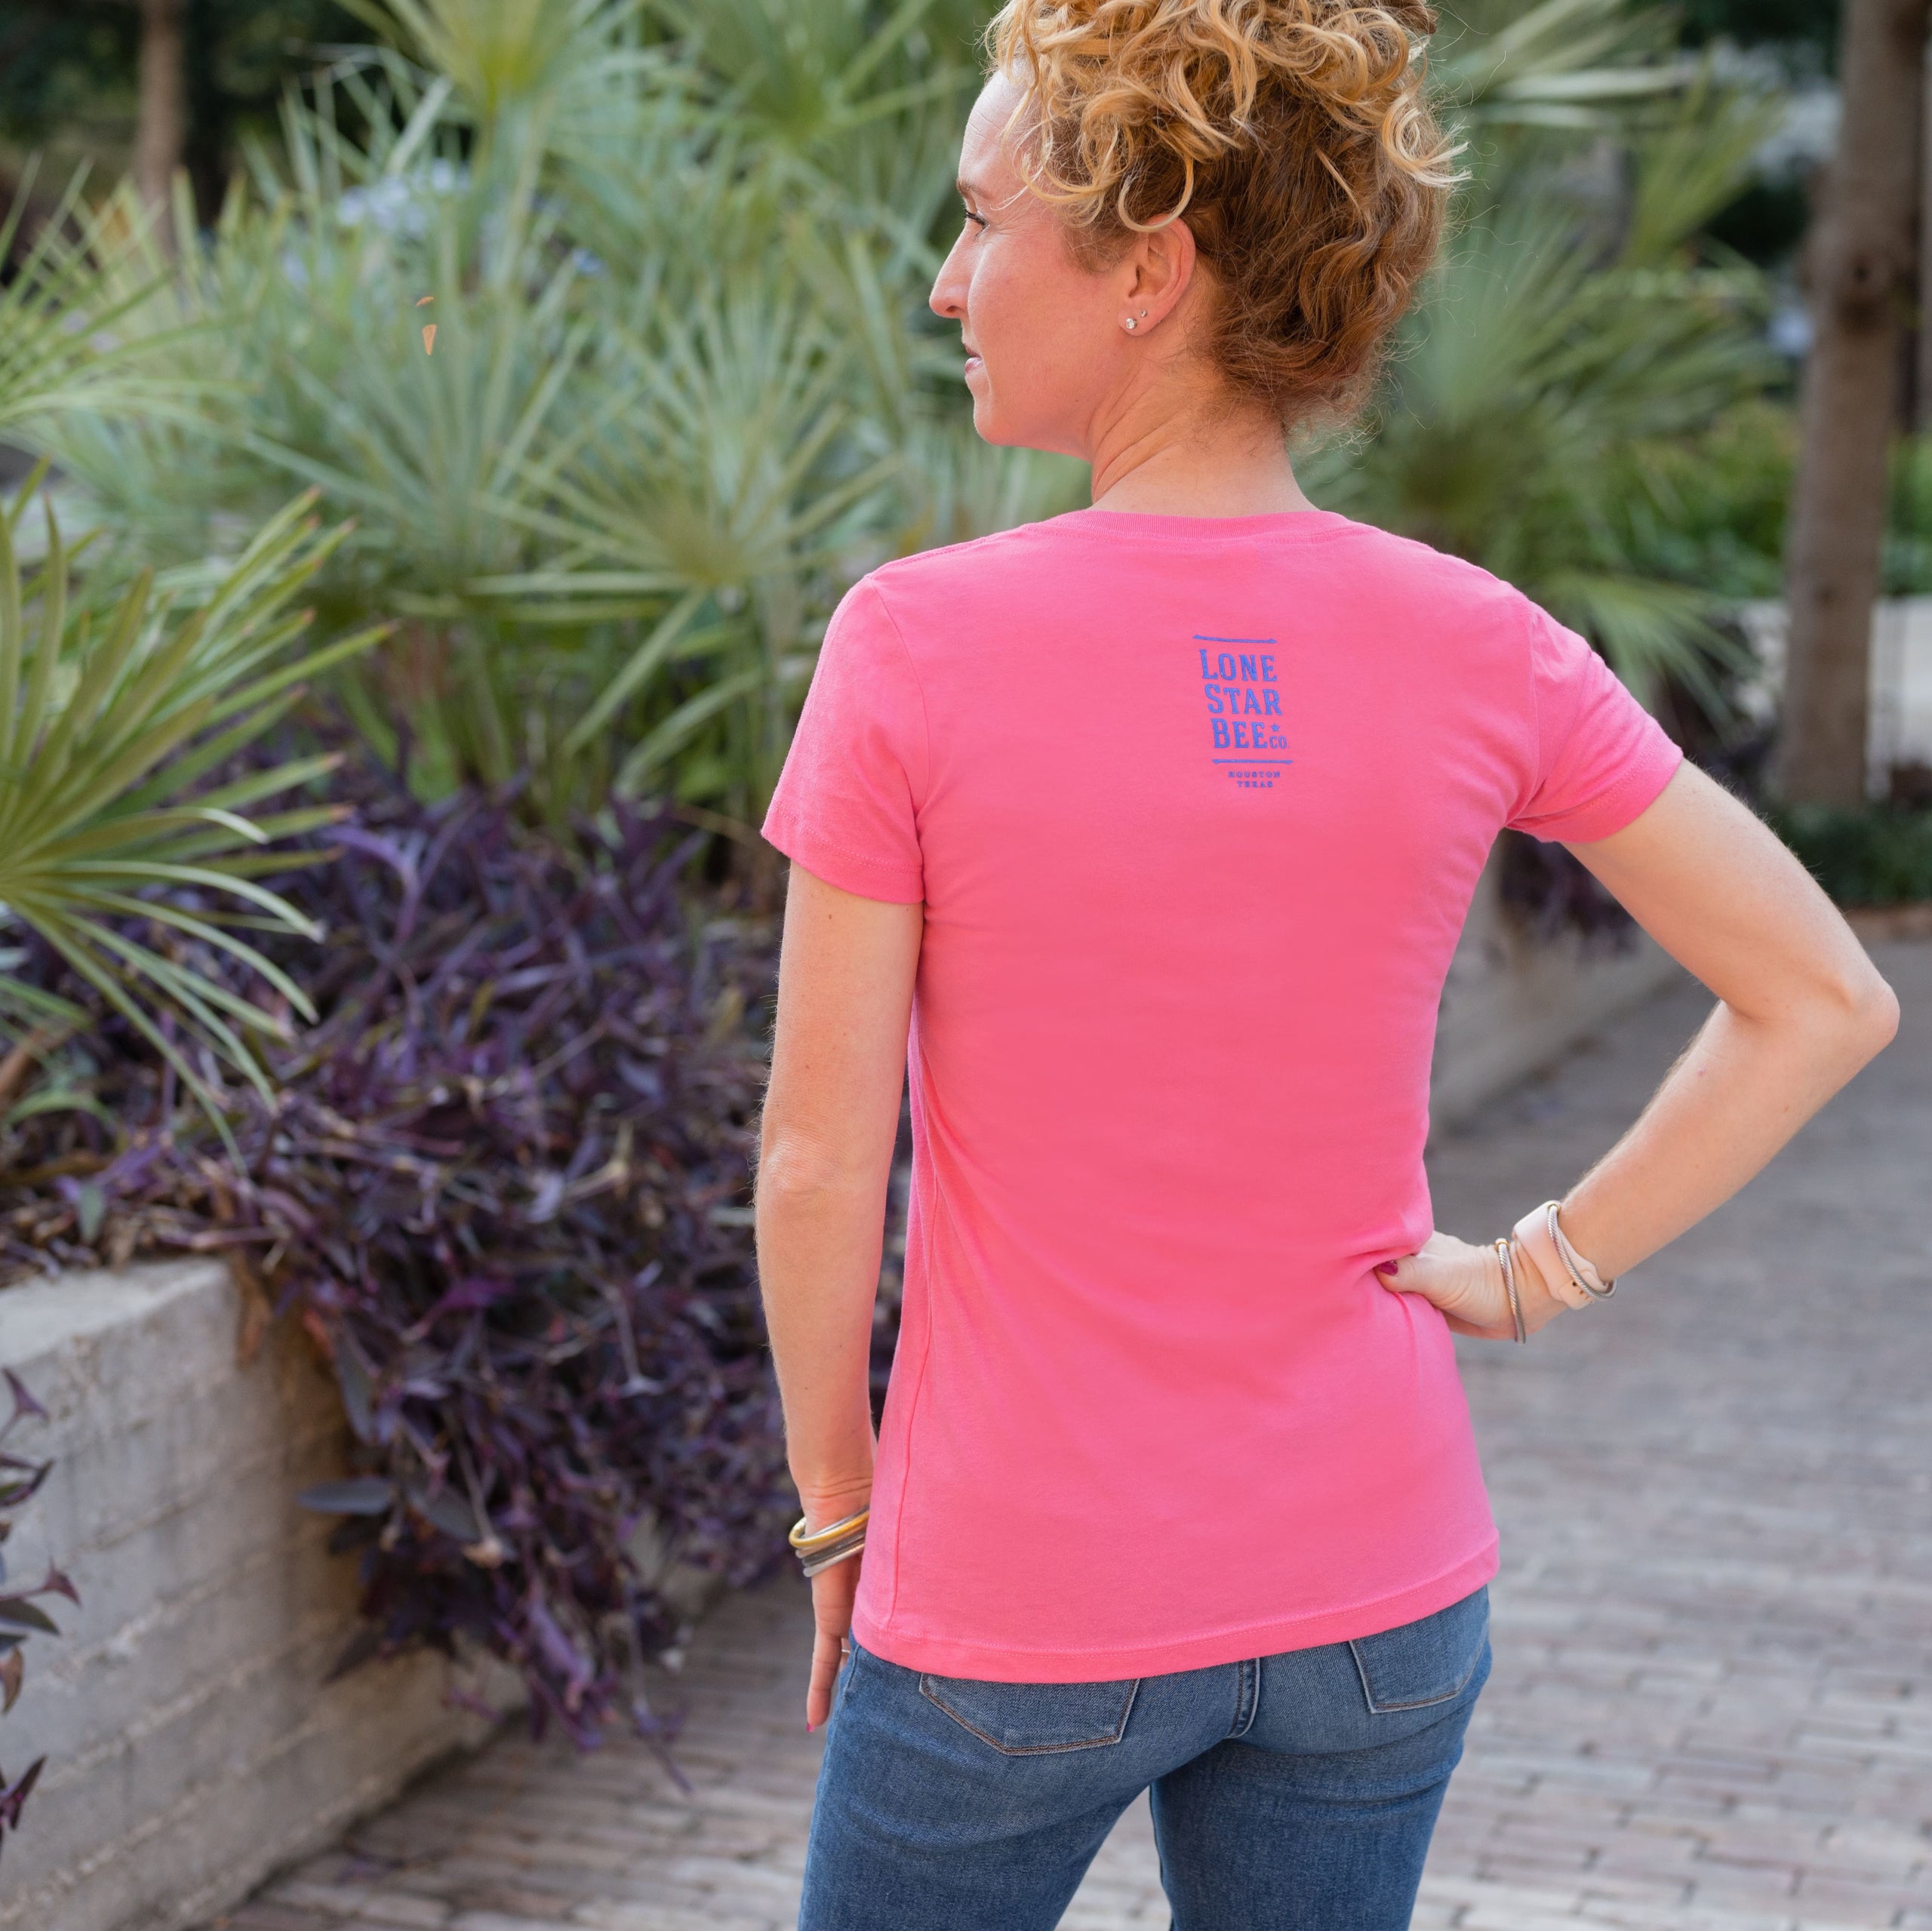 Monet hugge Ubetydelig Women's T-Shirt - Dusty Pink w/ Blue Infused Honey Design